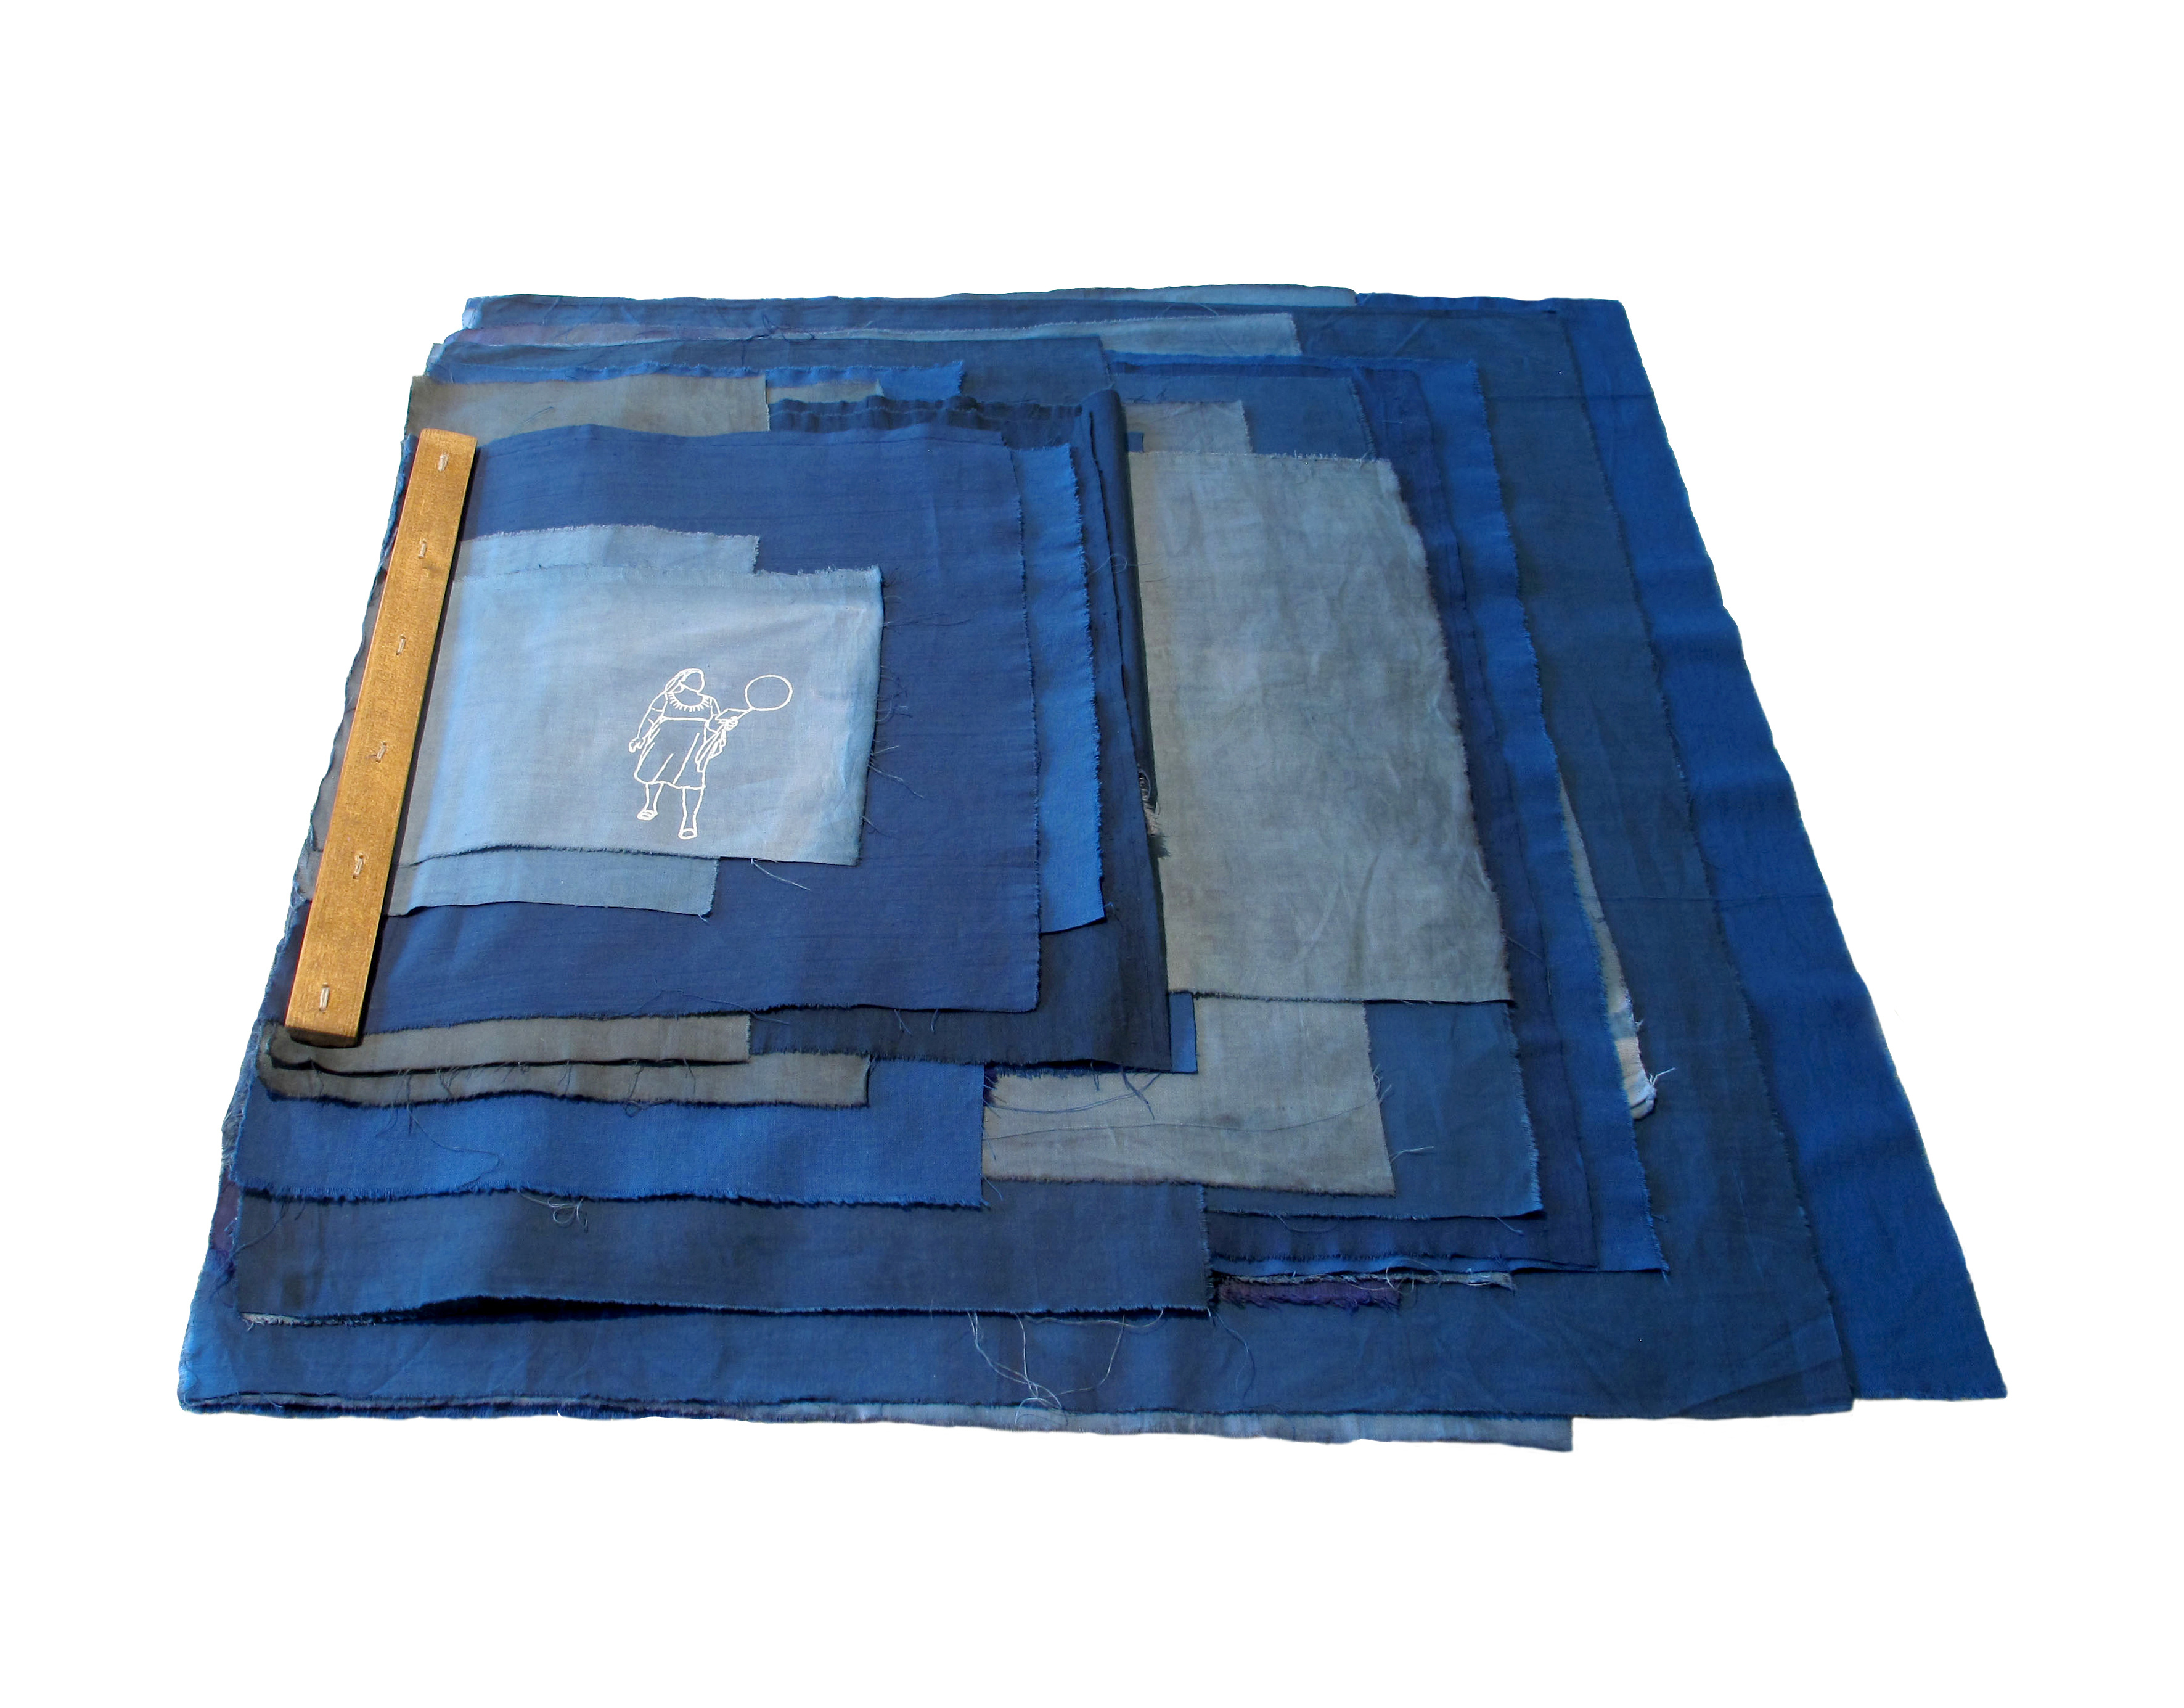 Tamuna Chabashvili, The Book of Patterns, 2015, Hand-dyed Textile, Print, Wood, 70x90 cm